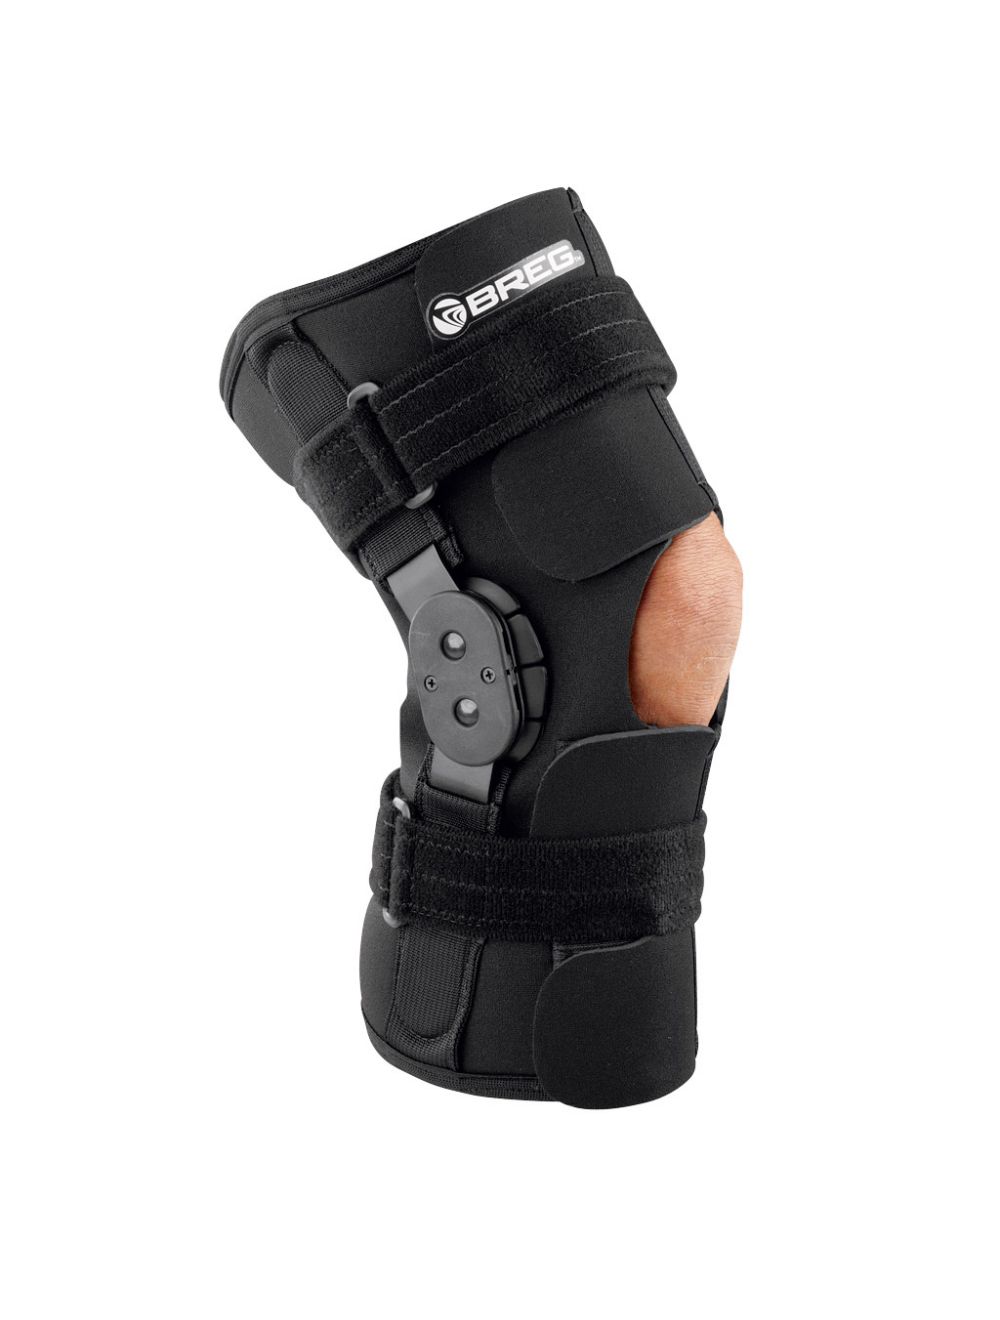 https://www.usawheelchair.com/pub/media/catalog/product/cache/ddb236bdd69ff7cc1401d94c525e1745/k/n/knee-bracing-breg-shortrunner-soft-knee-brace-2.jpg